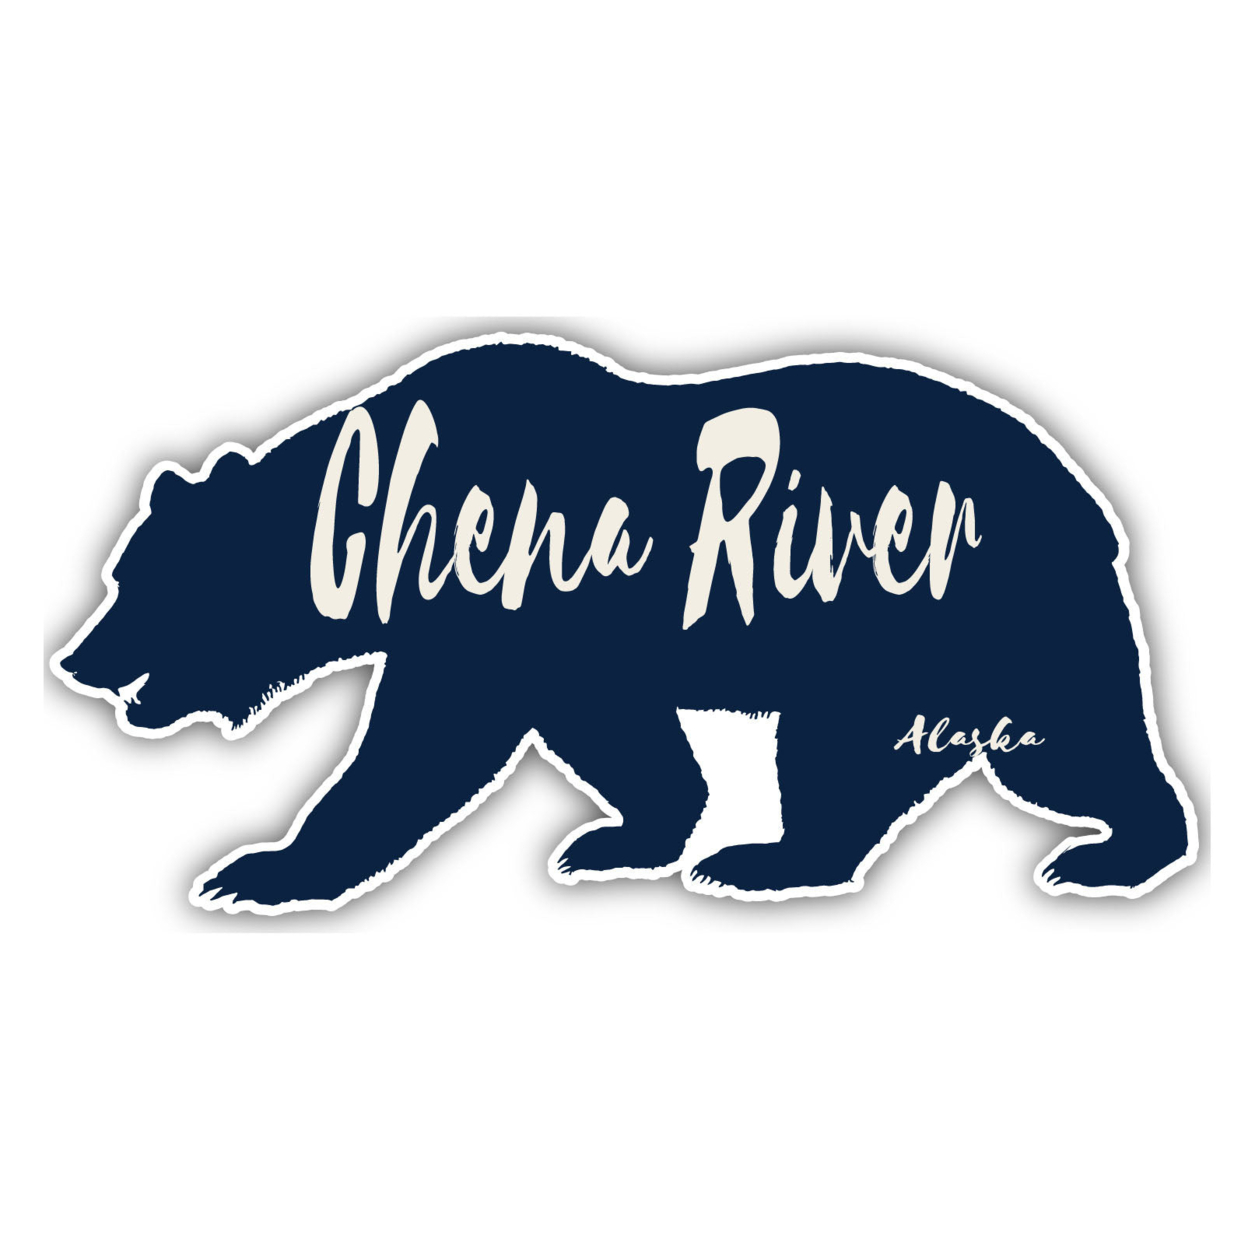 Chena River Alaska Souvenir Decorative Stickers (Choose Theme And Size) - Single Unit, 4-Inch, Bear